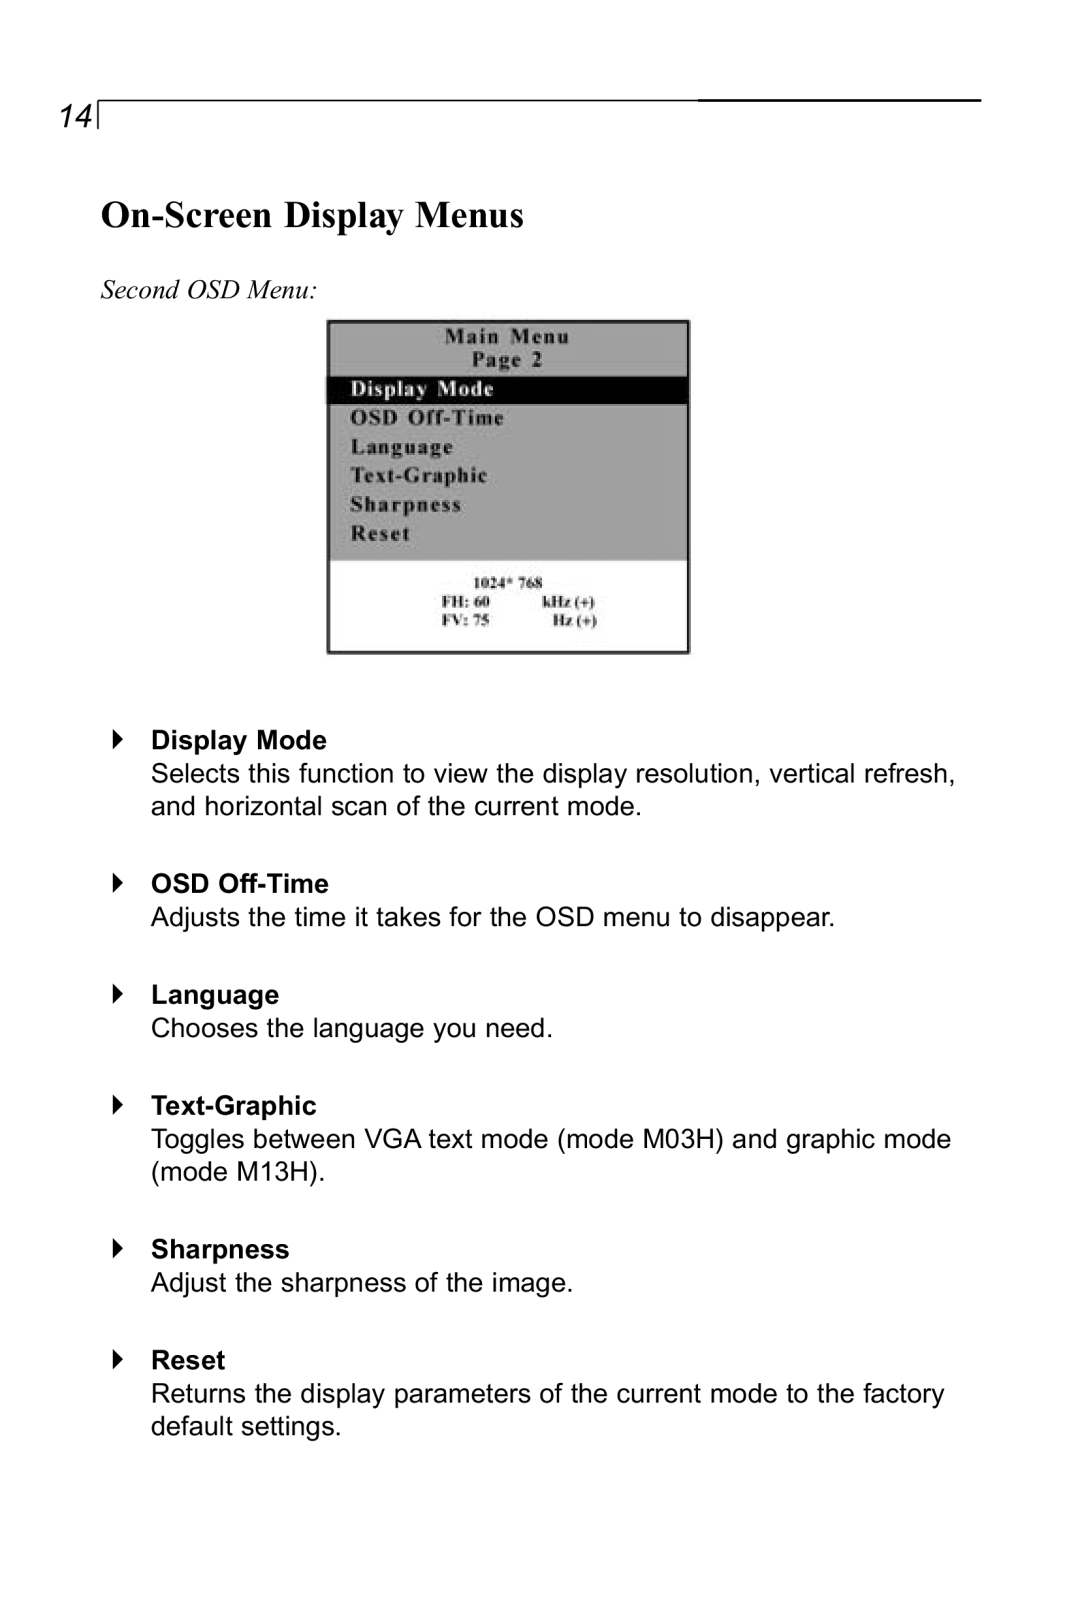 Planar LA1910RTC manual Display Mode, OSD Off-Time, Language, Text-Graphic, Sharpness, Reset, On-Screen Display Menus 